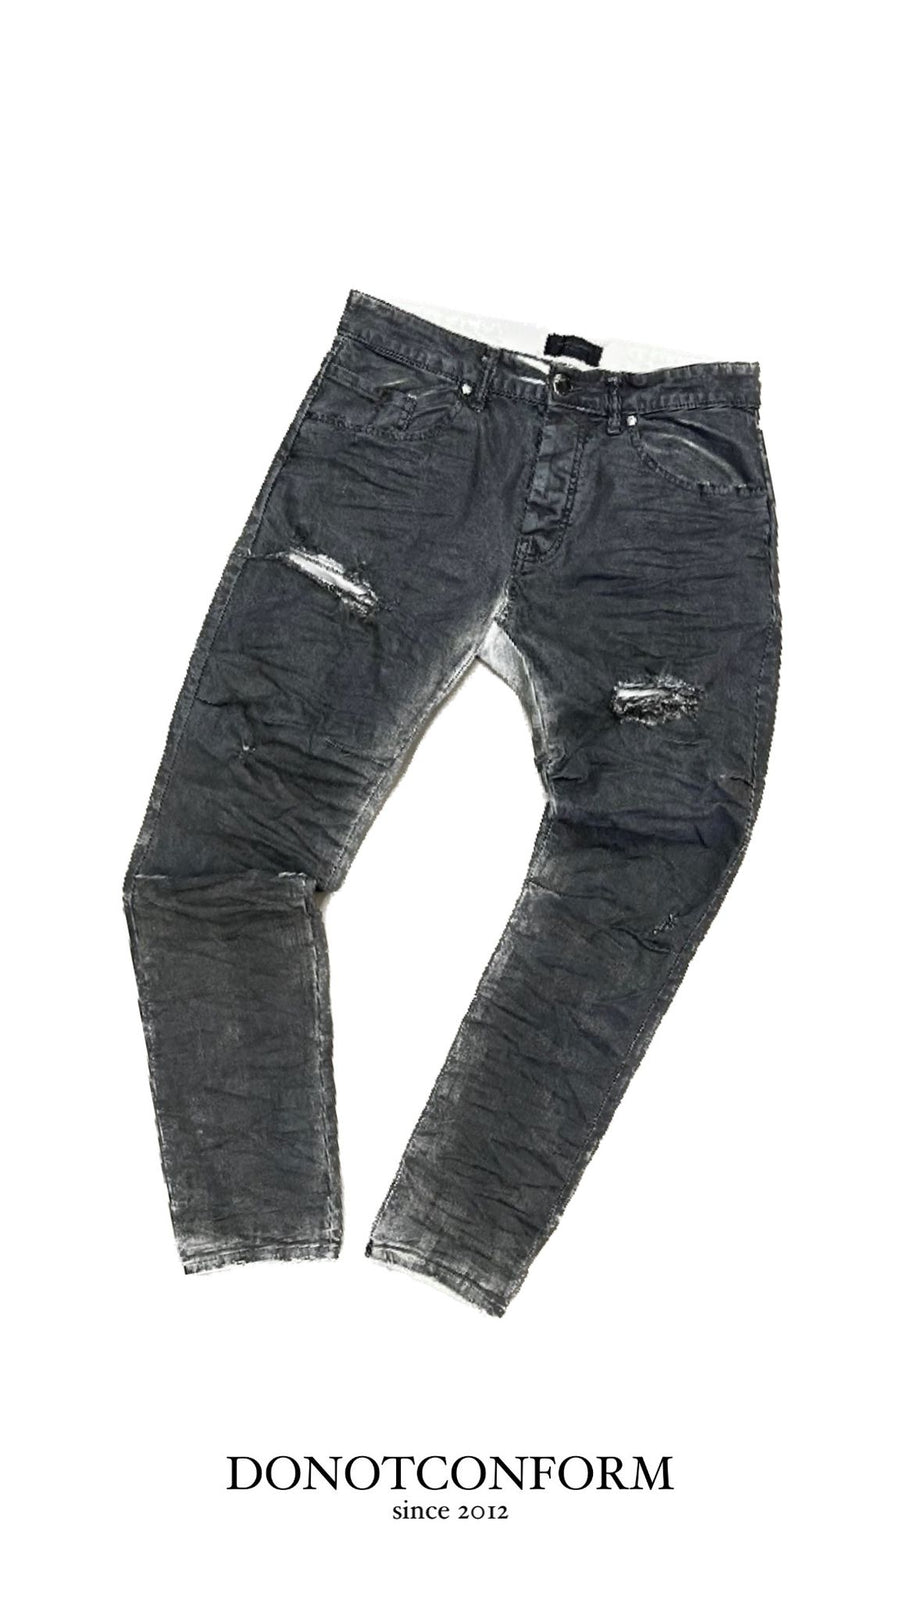 donotconform jeans j10